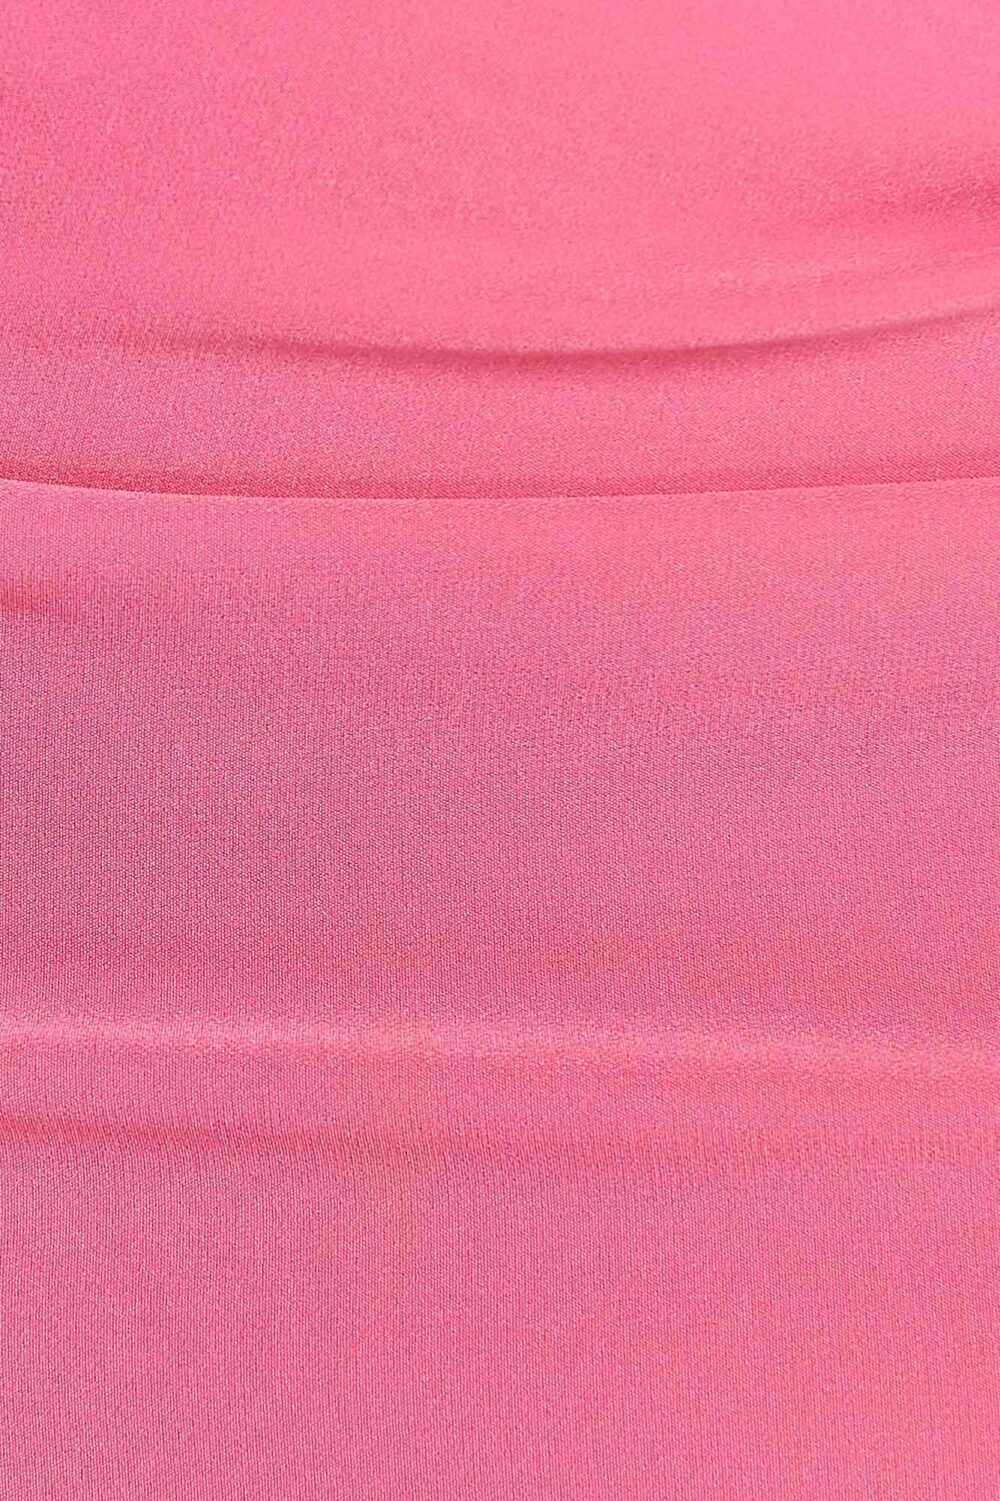 Ladies Dress Colour is Pink